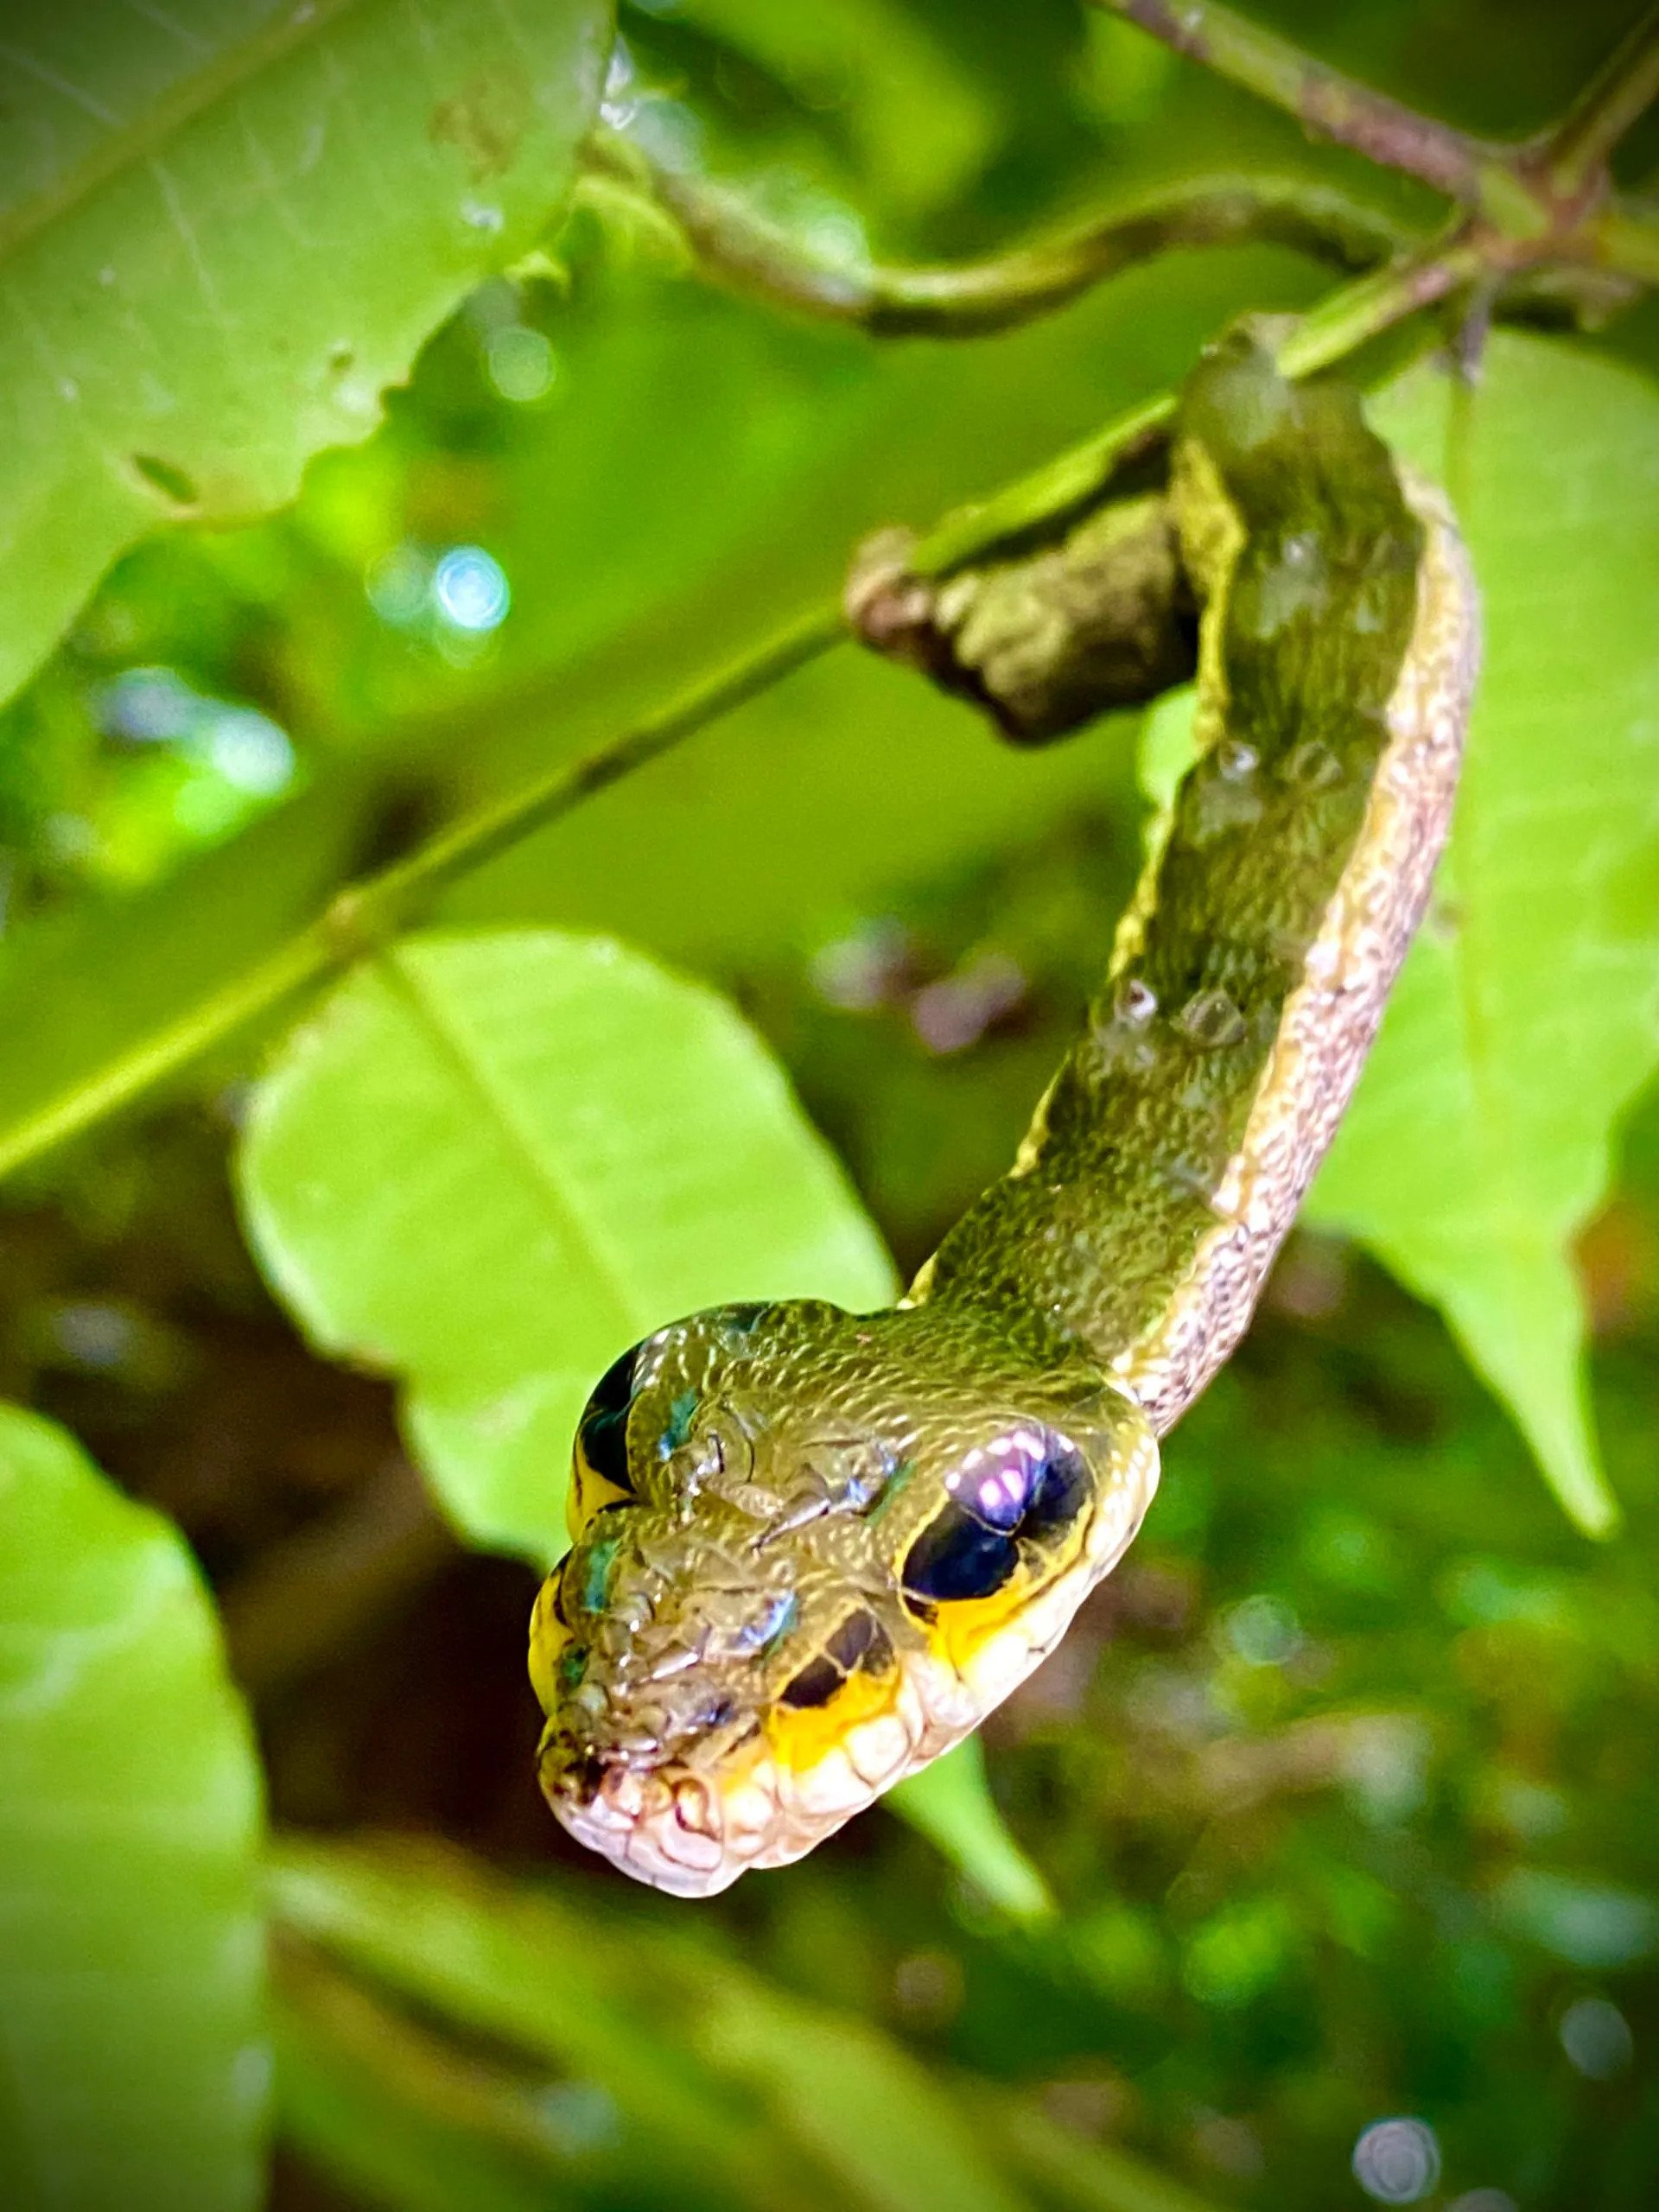 Snake-Mimic Caterpillar - A Caterpillar When Threatened Mimics The Snake Form